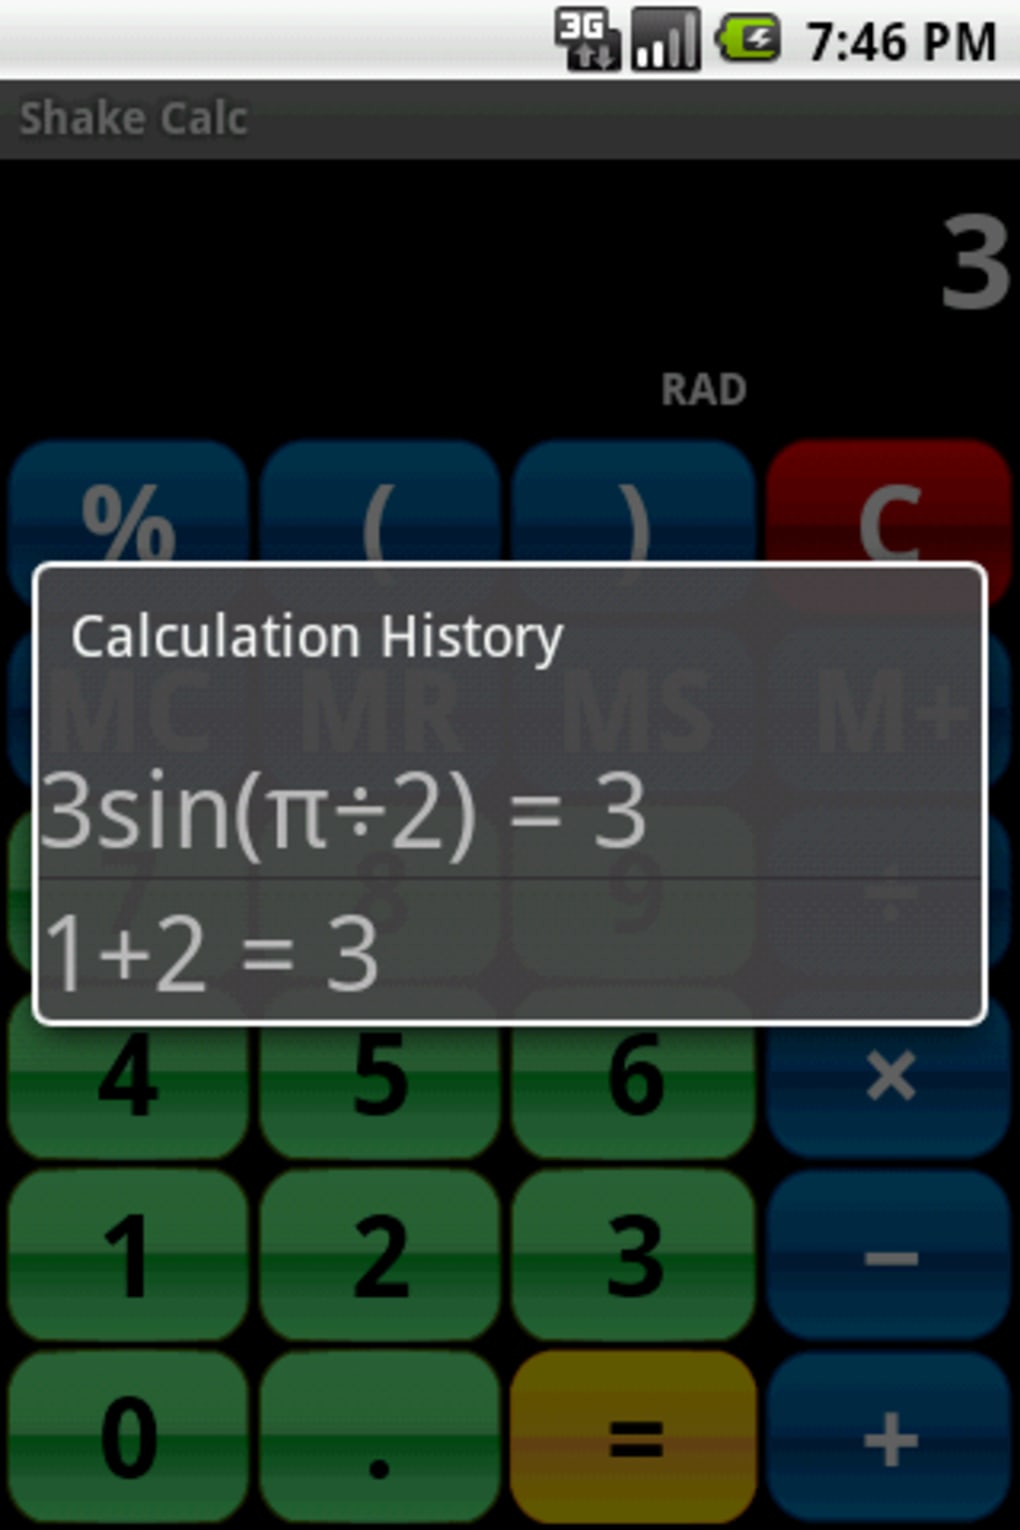 Shake Calc - Calculator APK для Android